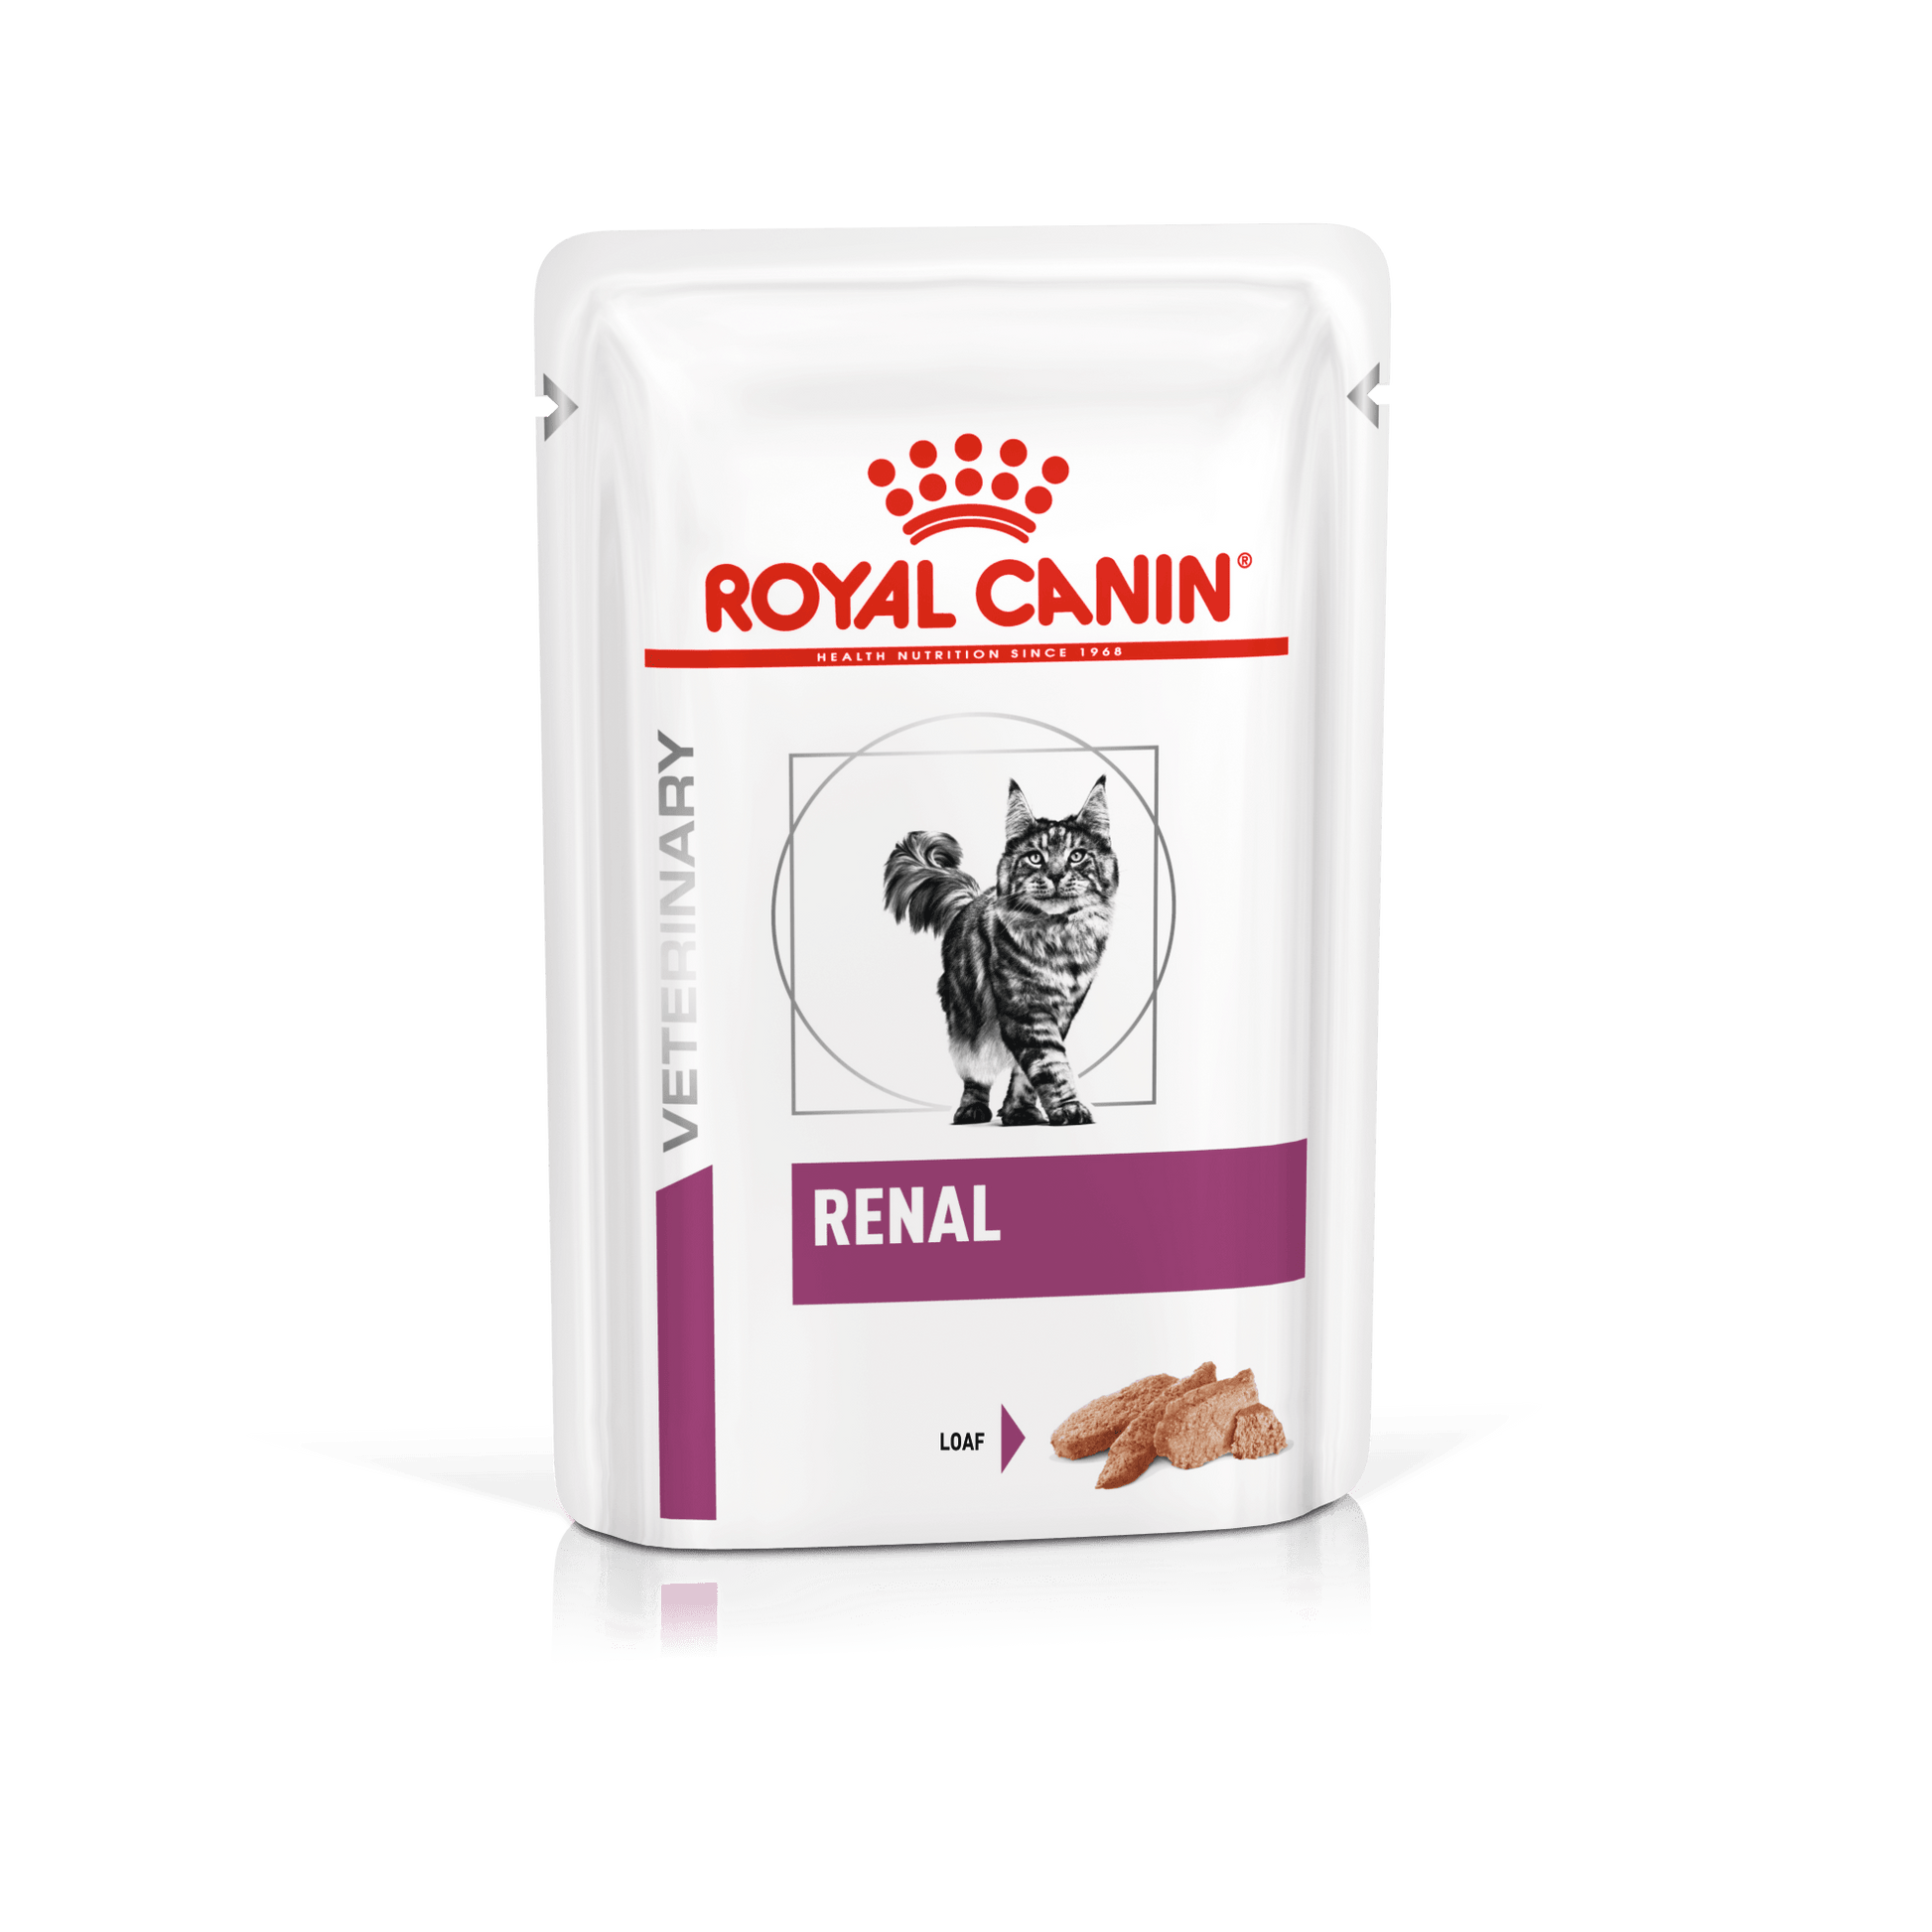 Renal Cat Beutel - Royal Canin Veterinary Diet - Alter:Adult, Alter:Senior, Erkrankung:Harnwege, Erkrankung:Niere, Futterart:Nass, Geschmack:Huhn, Geschmack:Rind, Geschmack:Thunfisch, Tierart:Katze - Marigin AG Onlineshop für Tierbedarf